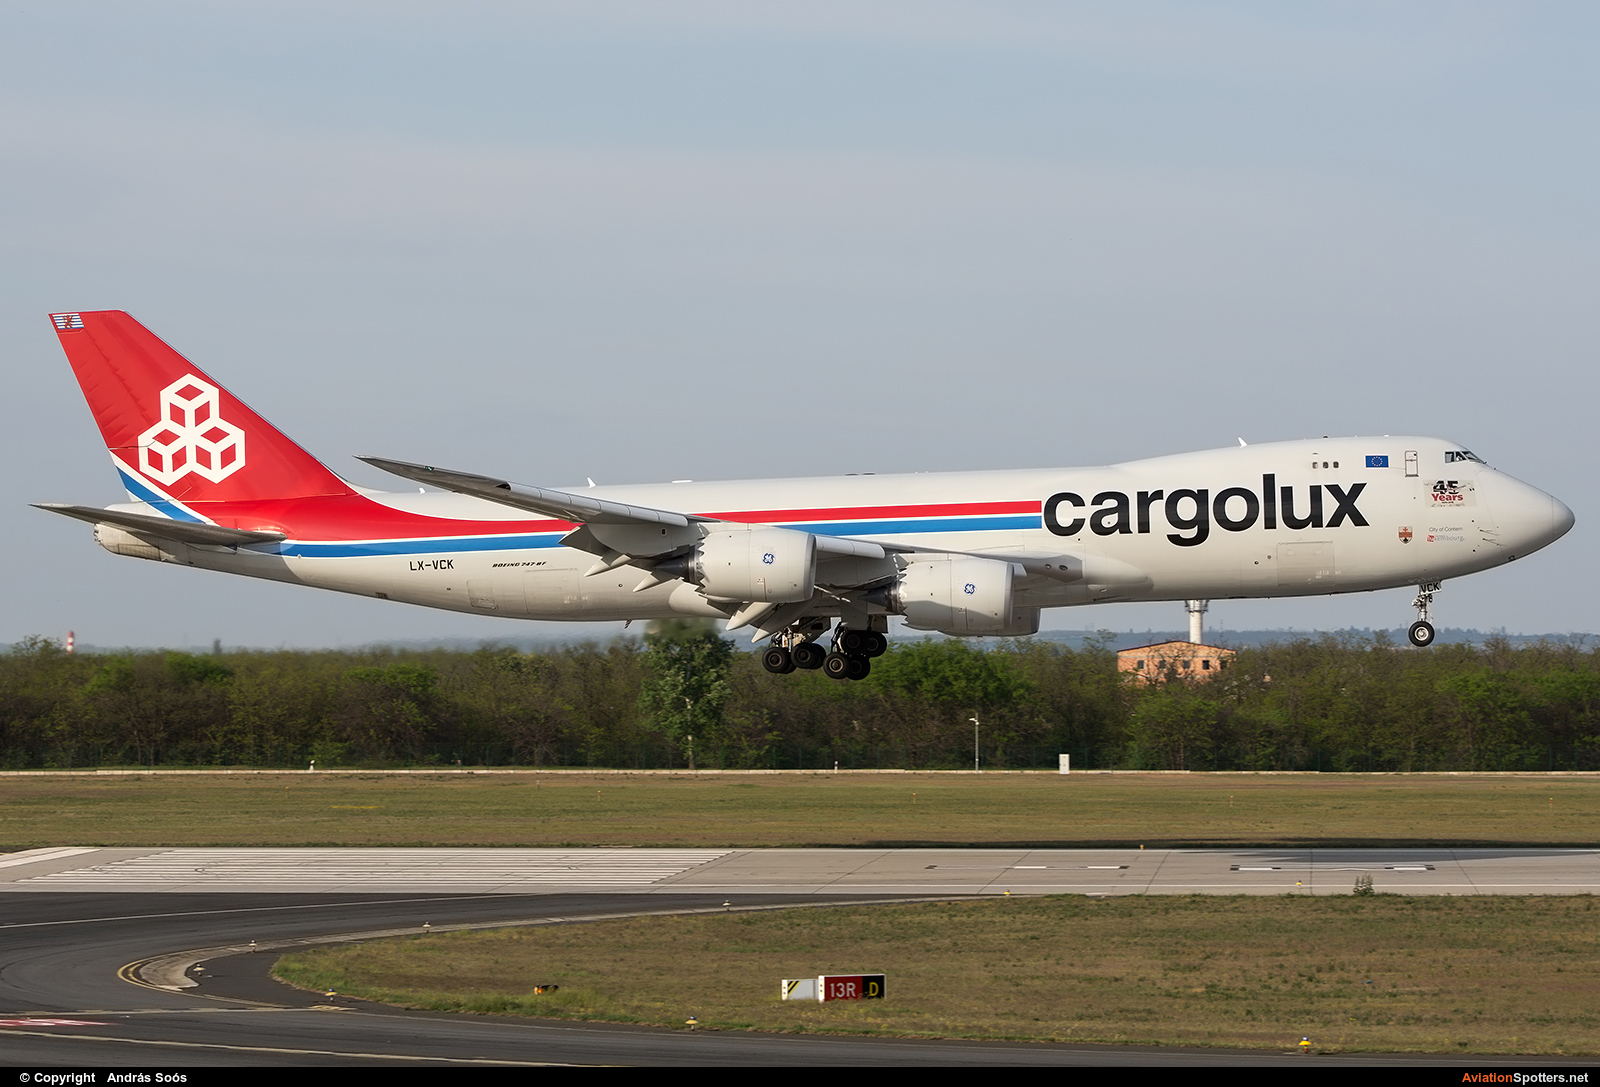 Cargolux  -  747-8R7F  (LX-VCK) By András Soós (sas1965)